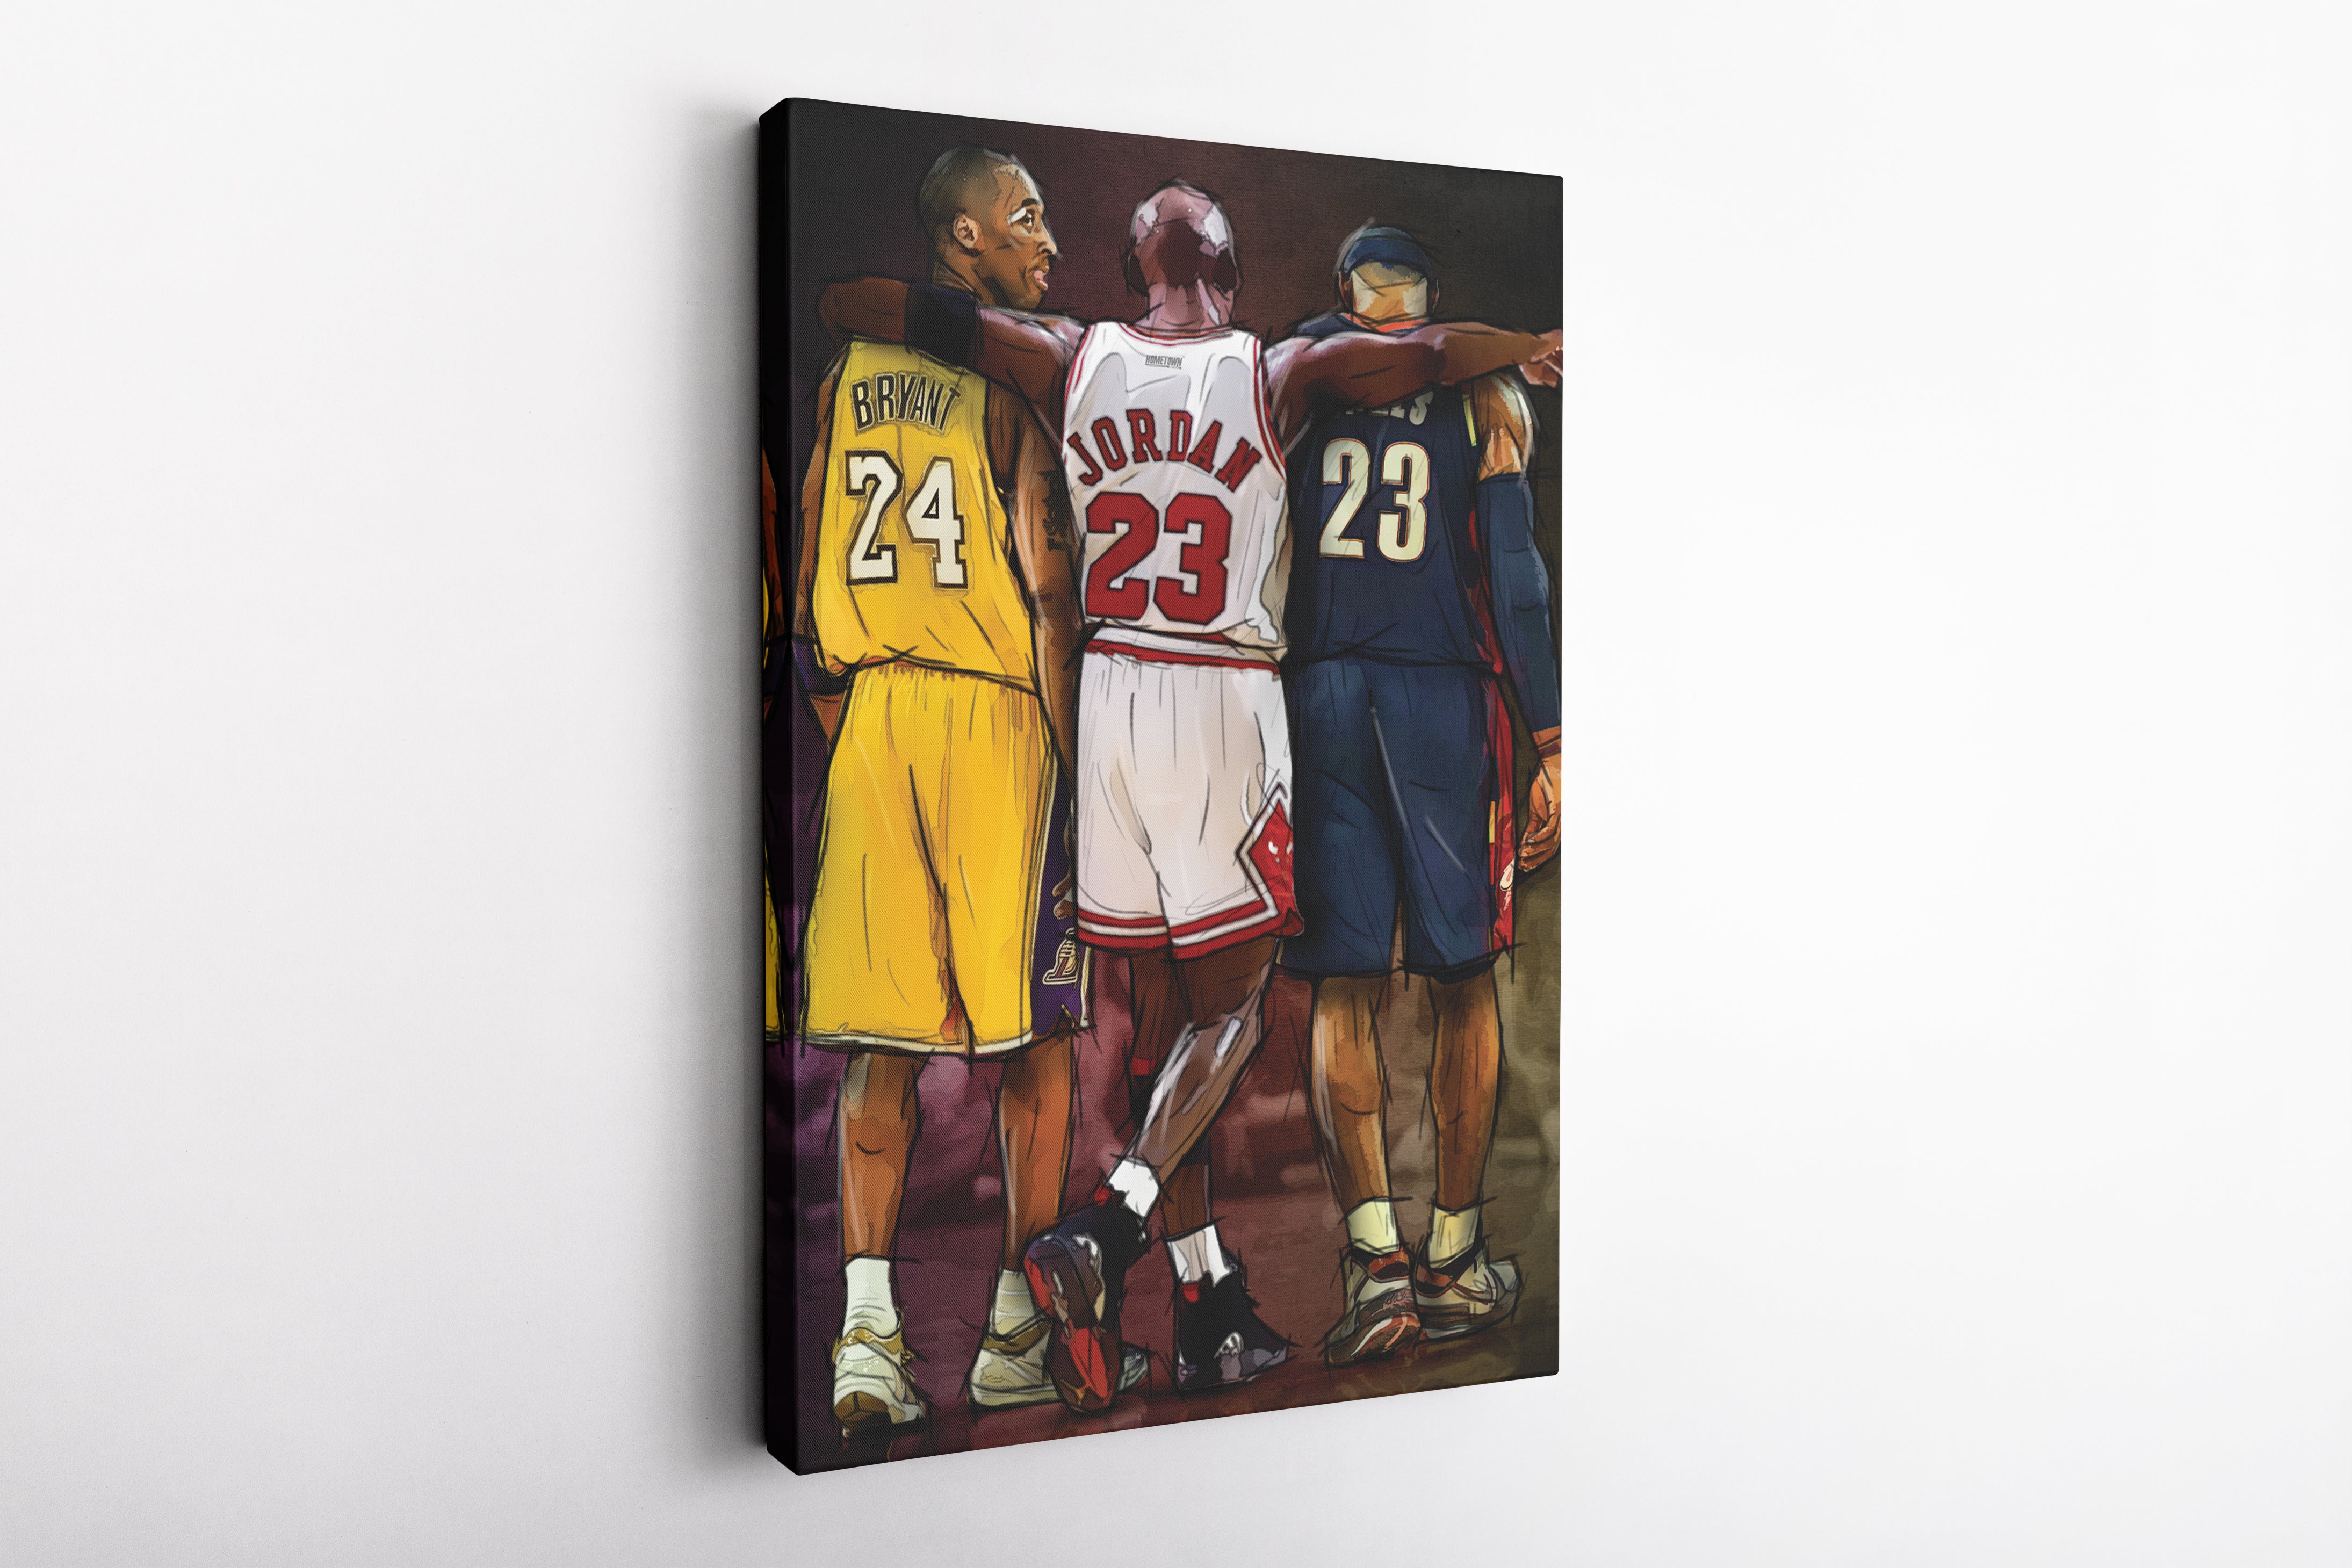 Michael Jordan Vs Kobe Bryant Poster